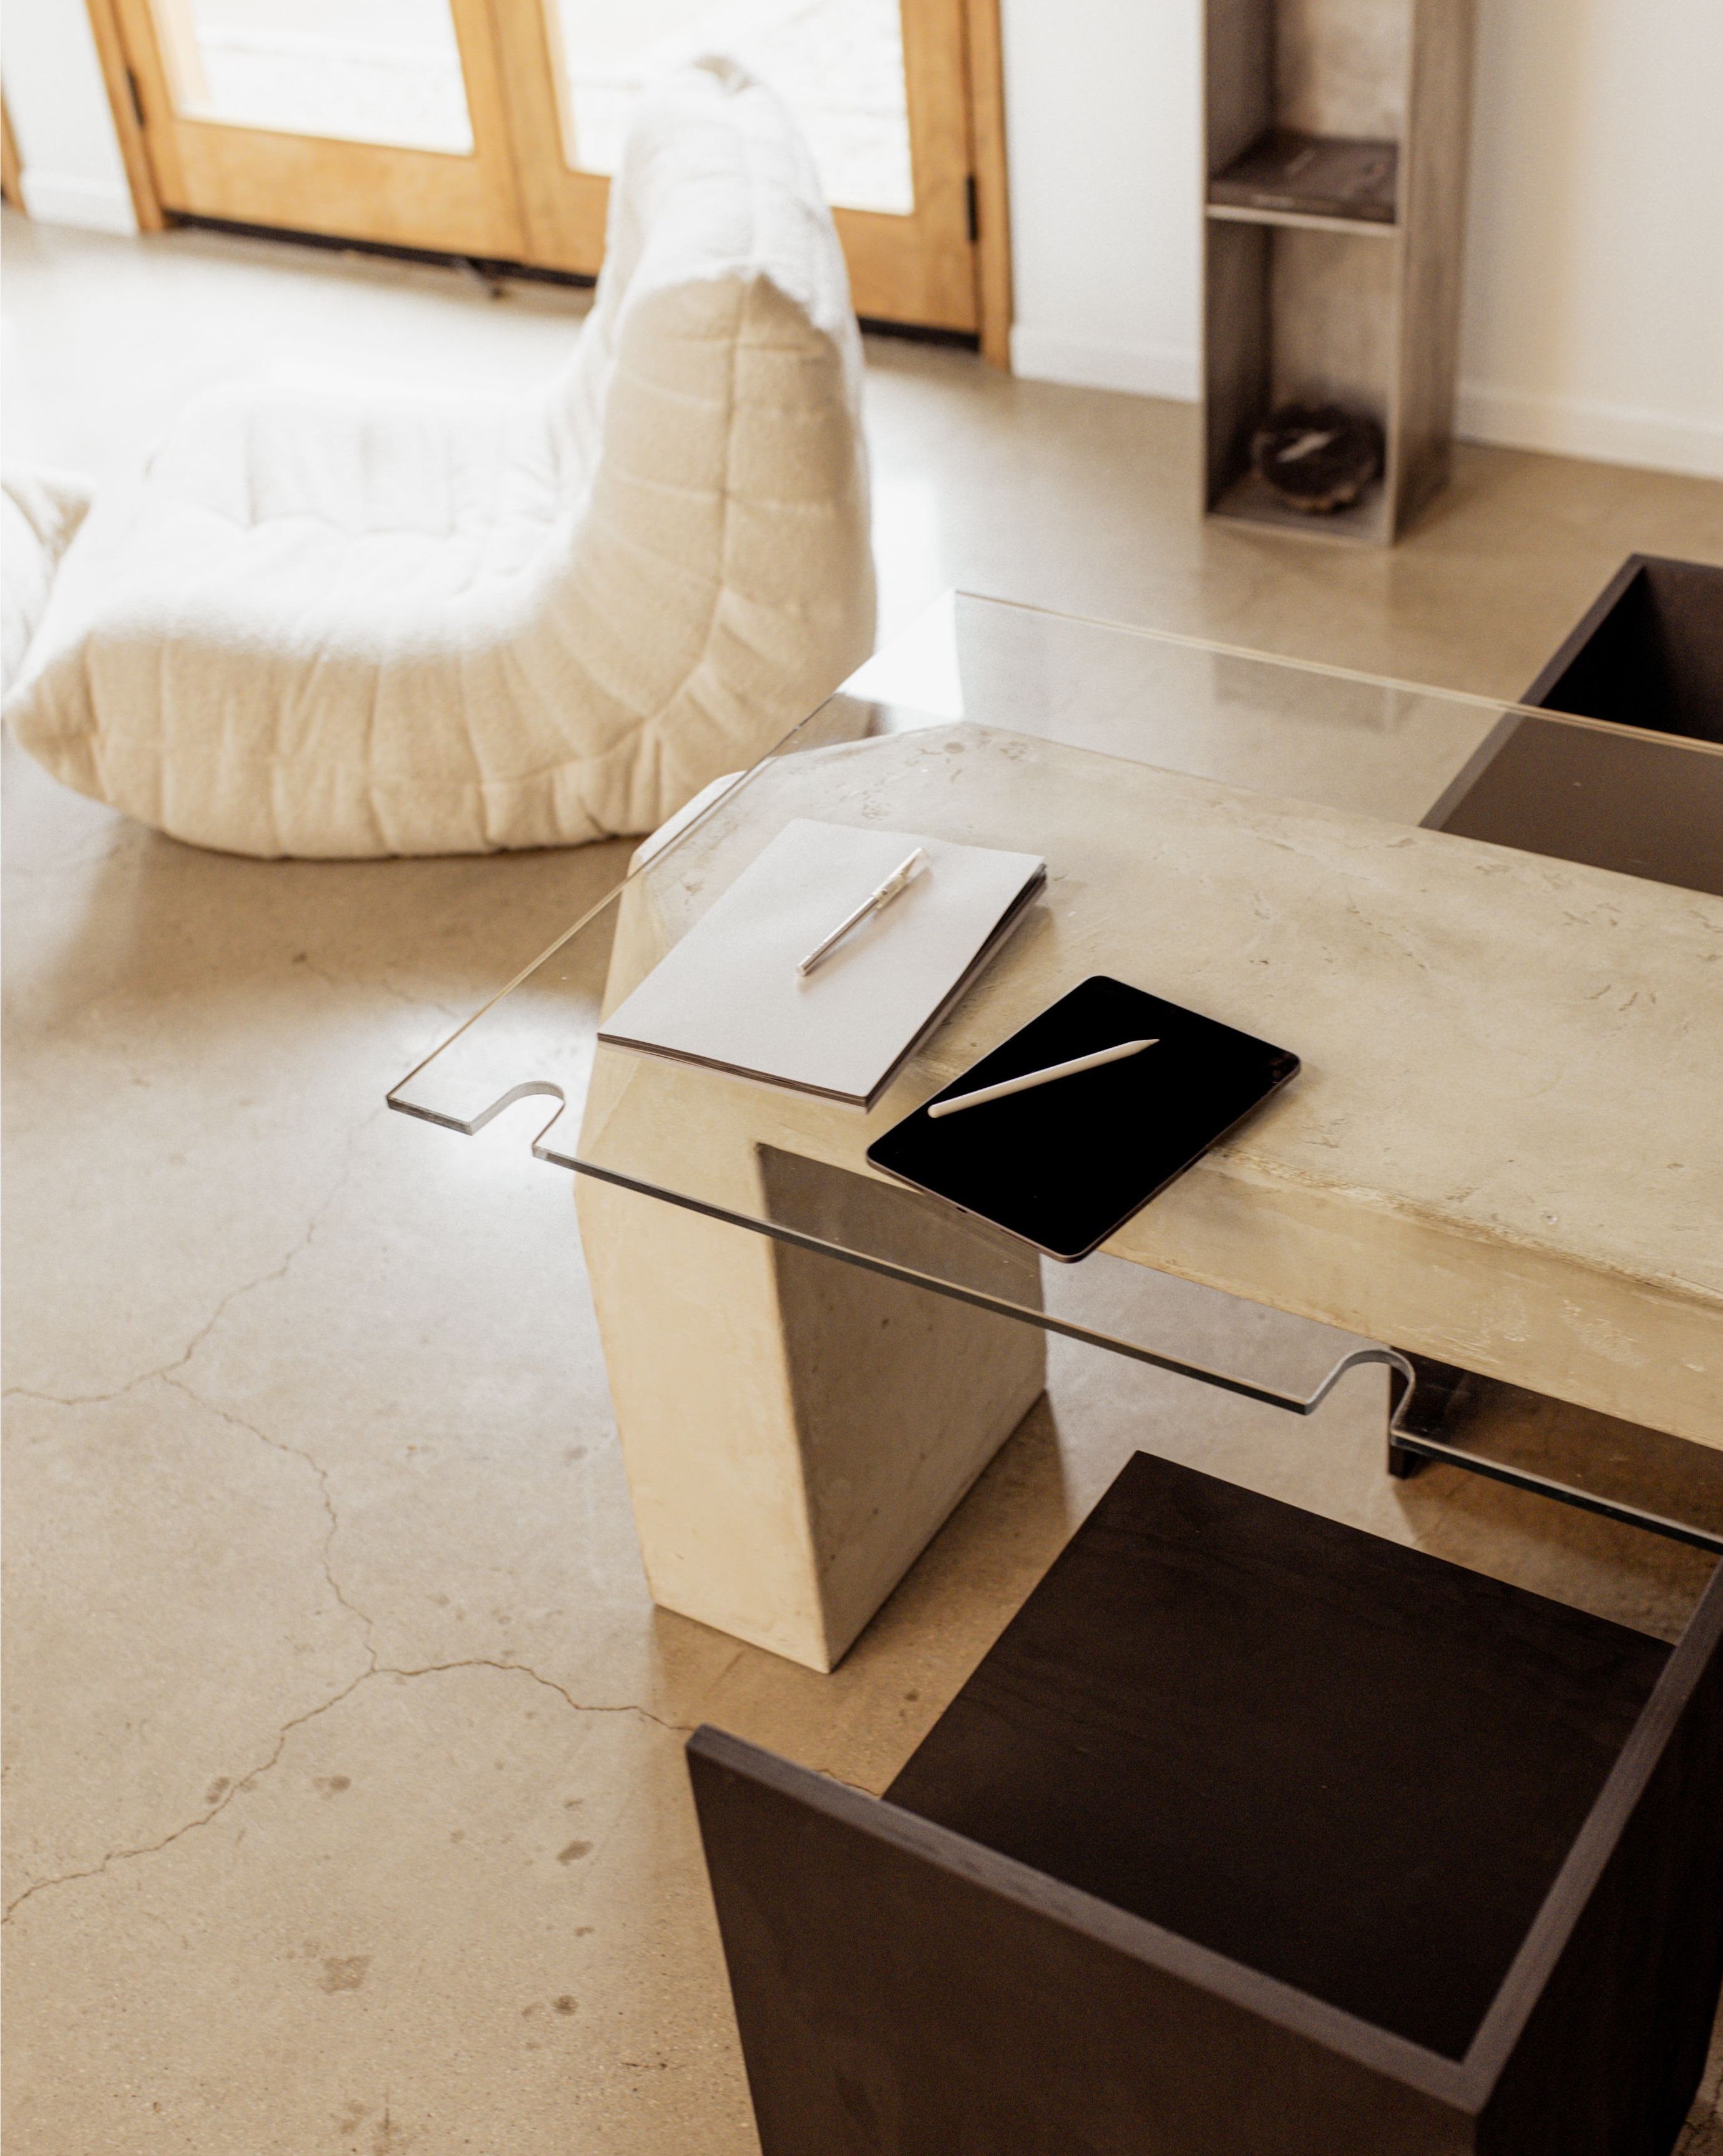 A modern minimalist interior design for office